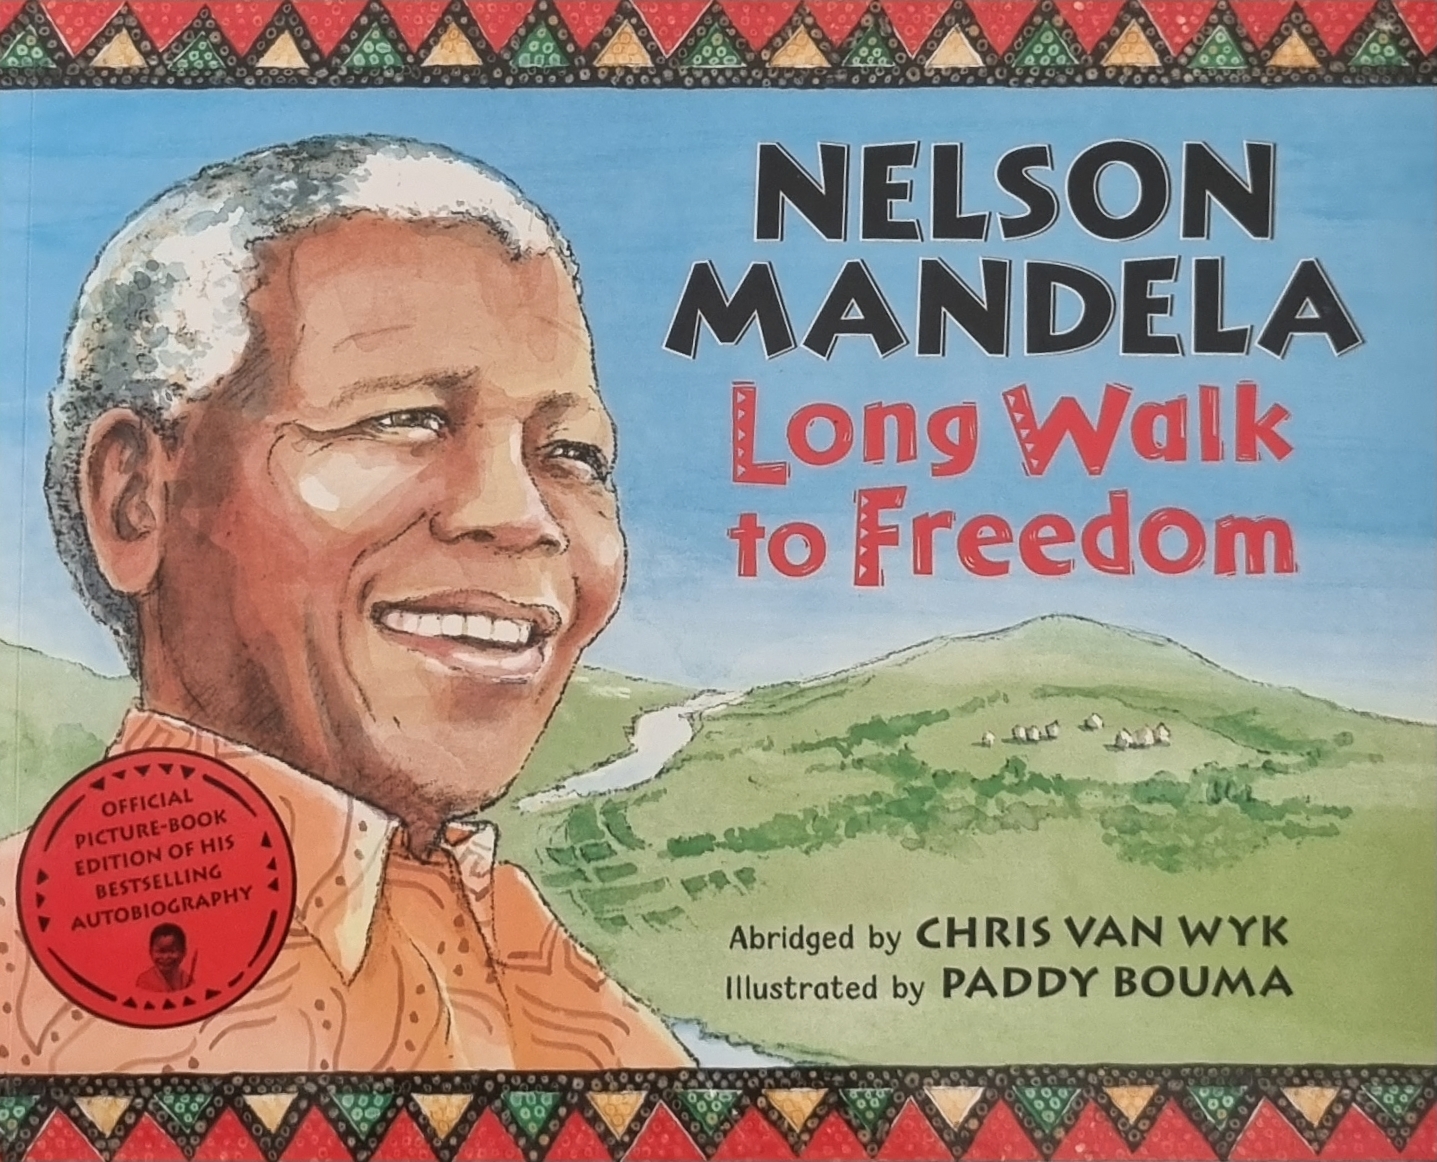 Long walk to freedom